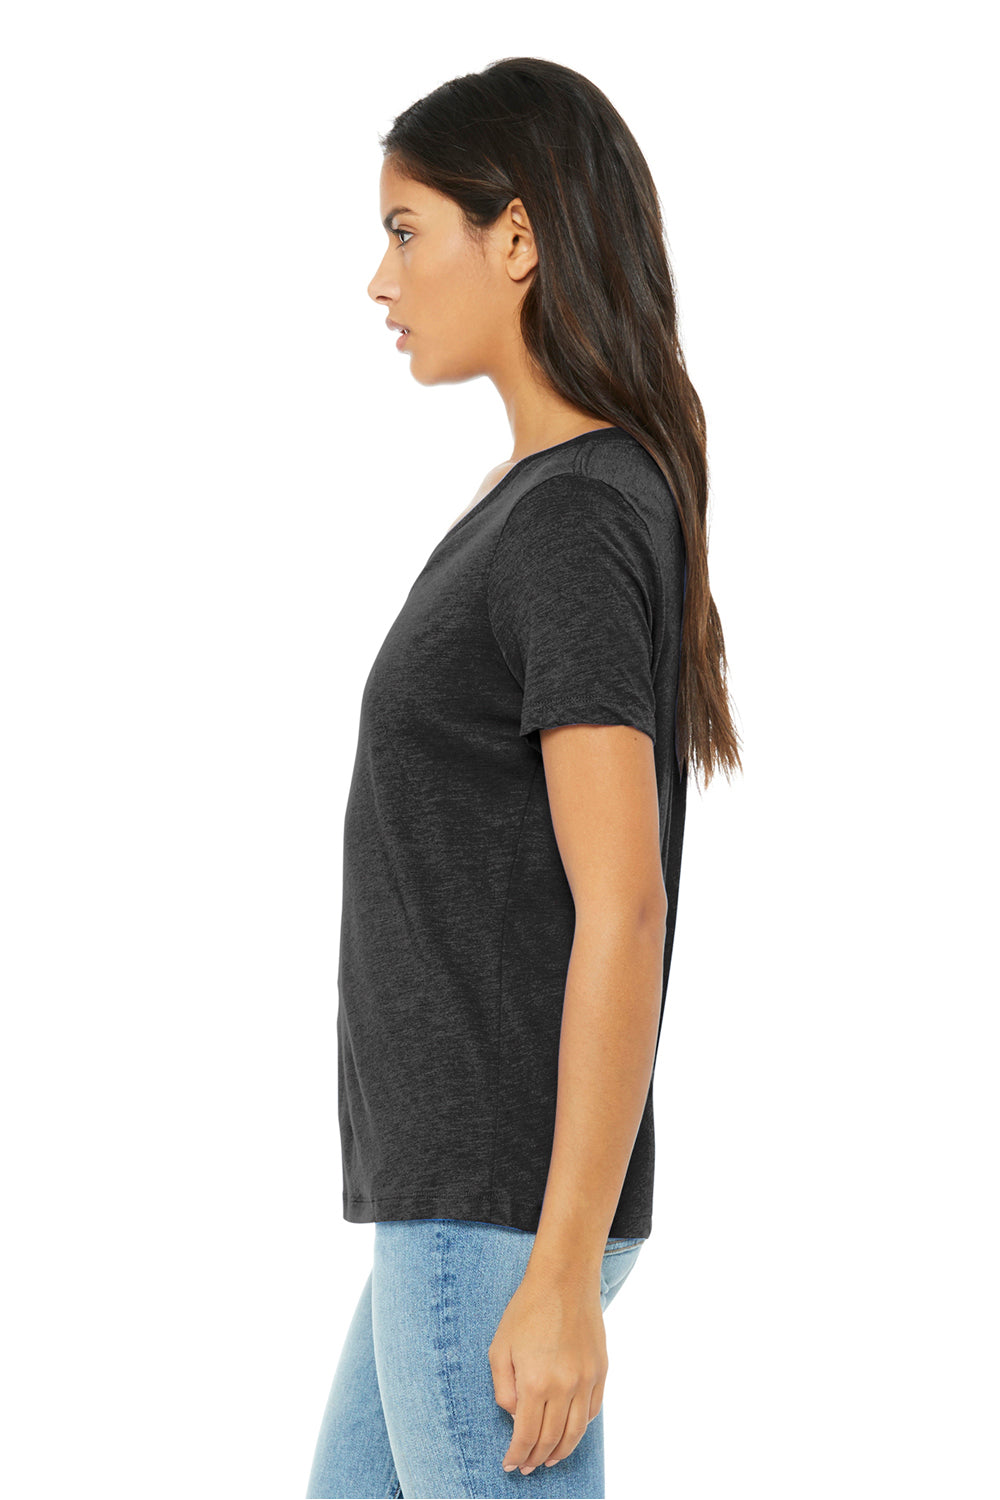 Bella + Canvas BC6415 Womens Short Sleeve V-Neck T-Shirt Charcoal Black Model Side